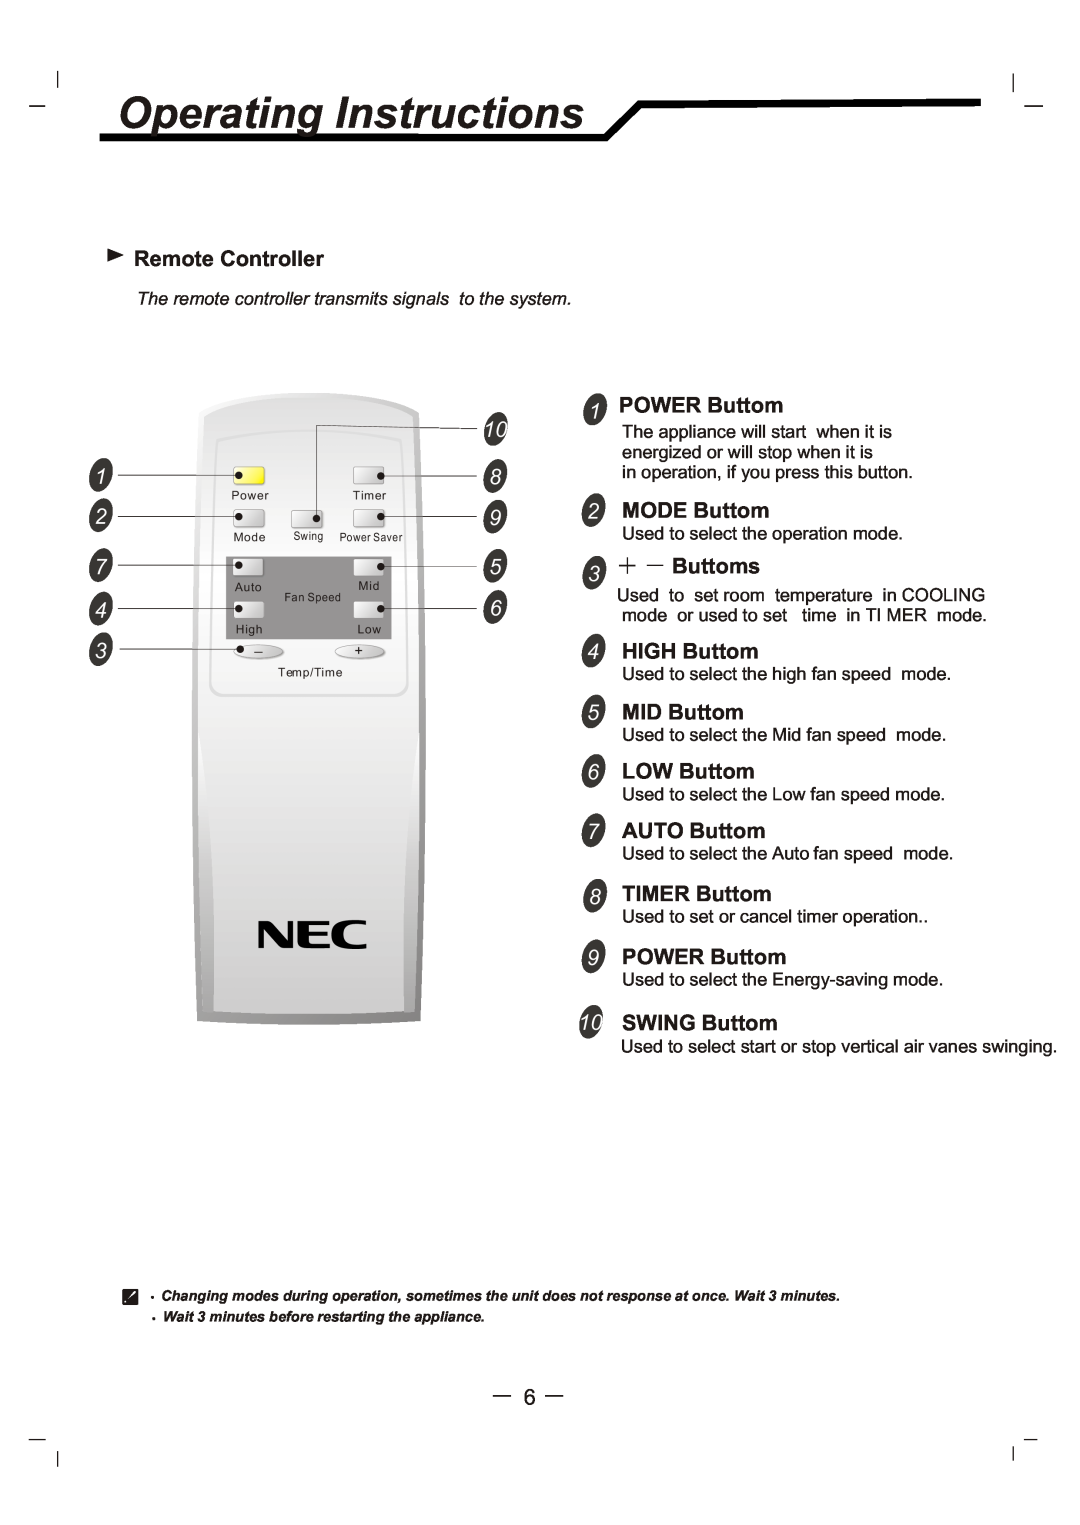 NEC RWC-4717, RWC-3217 user manual Operating Instructions, Remote Controller, 1 2 7 4 